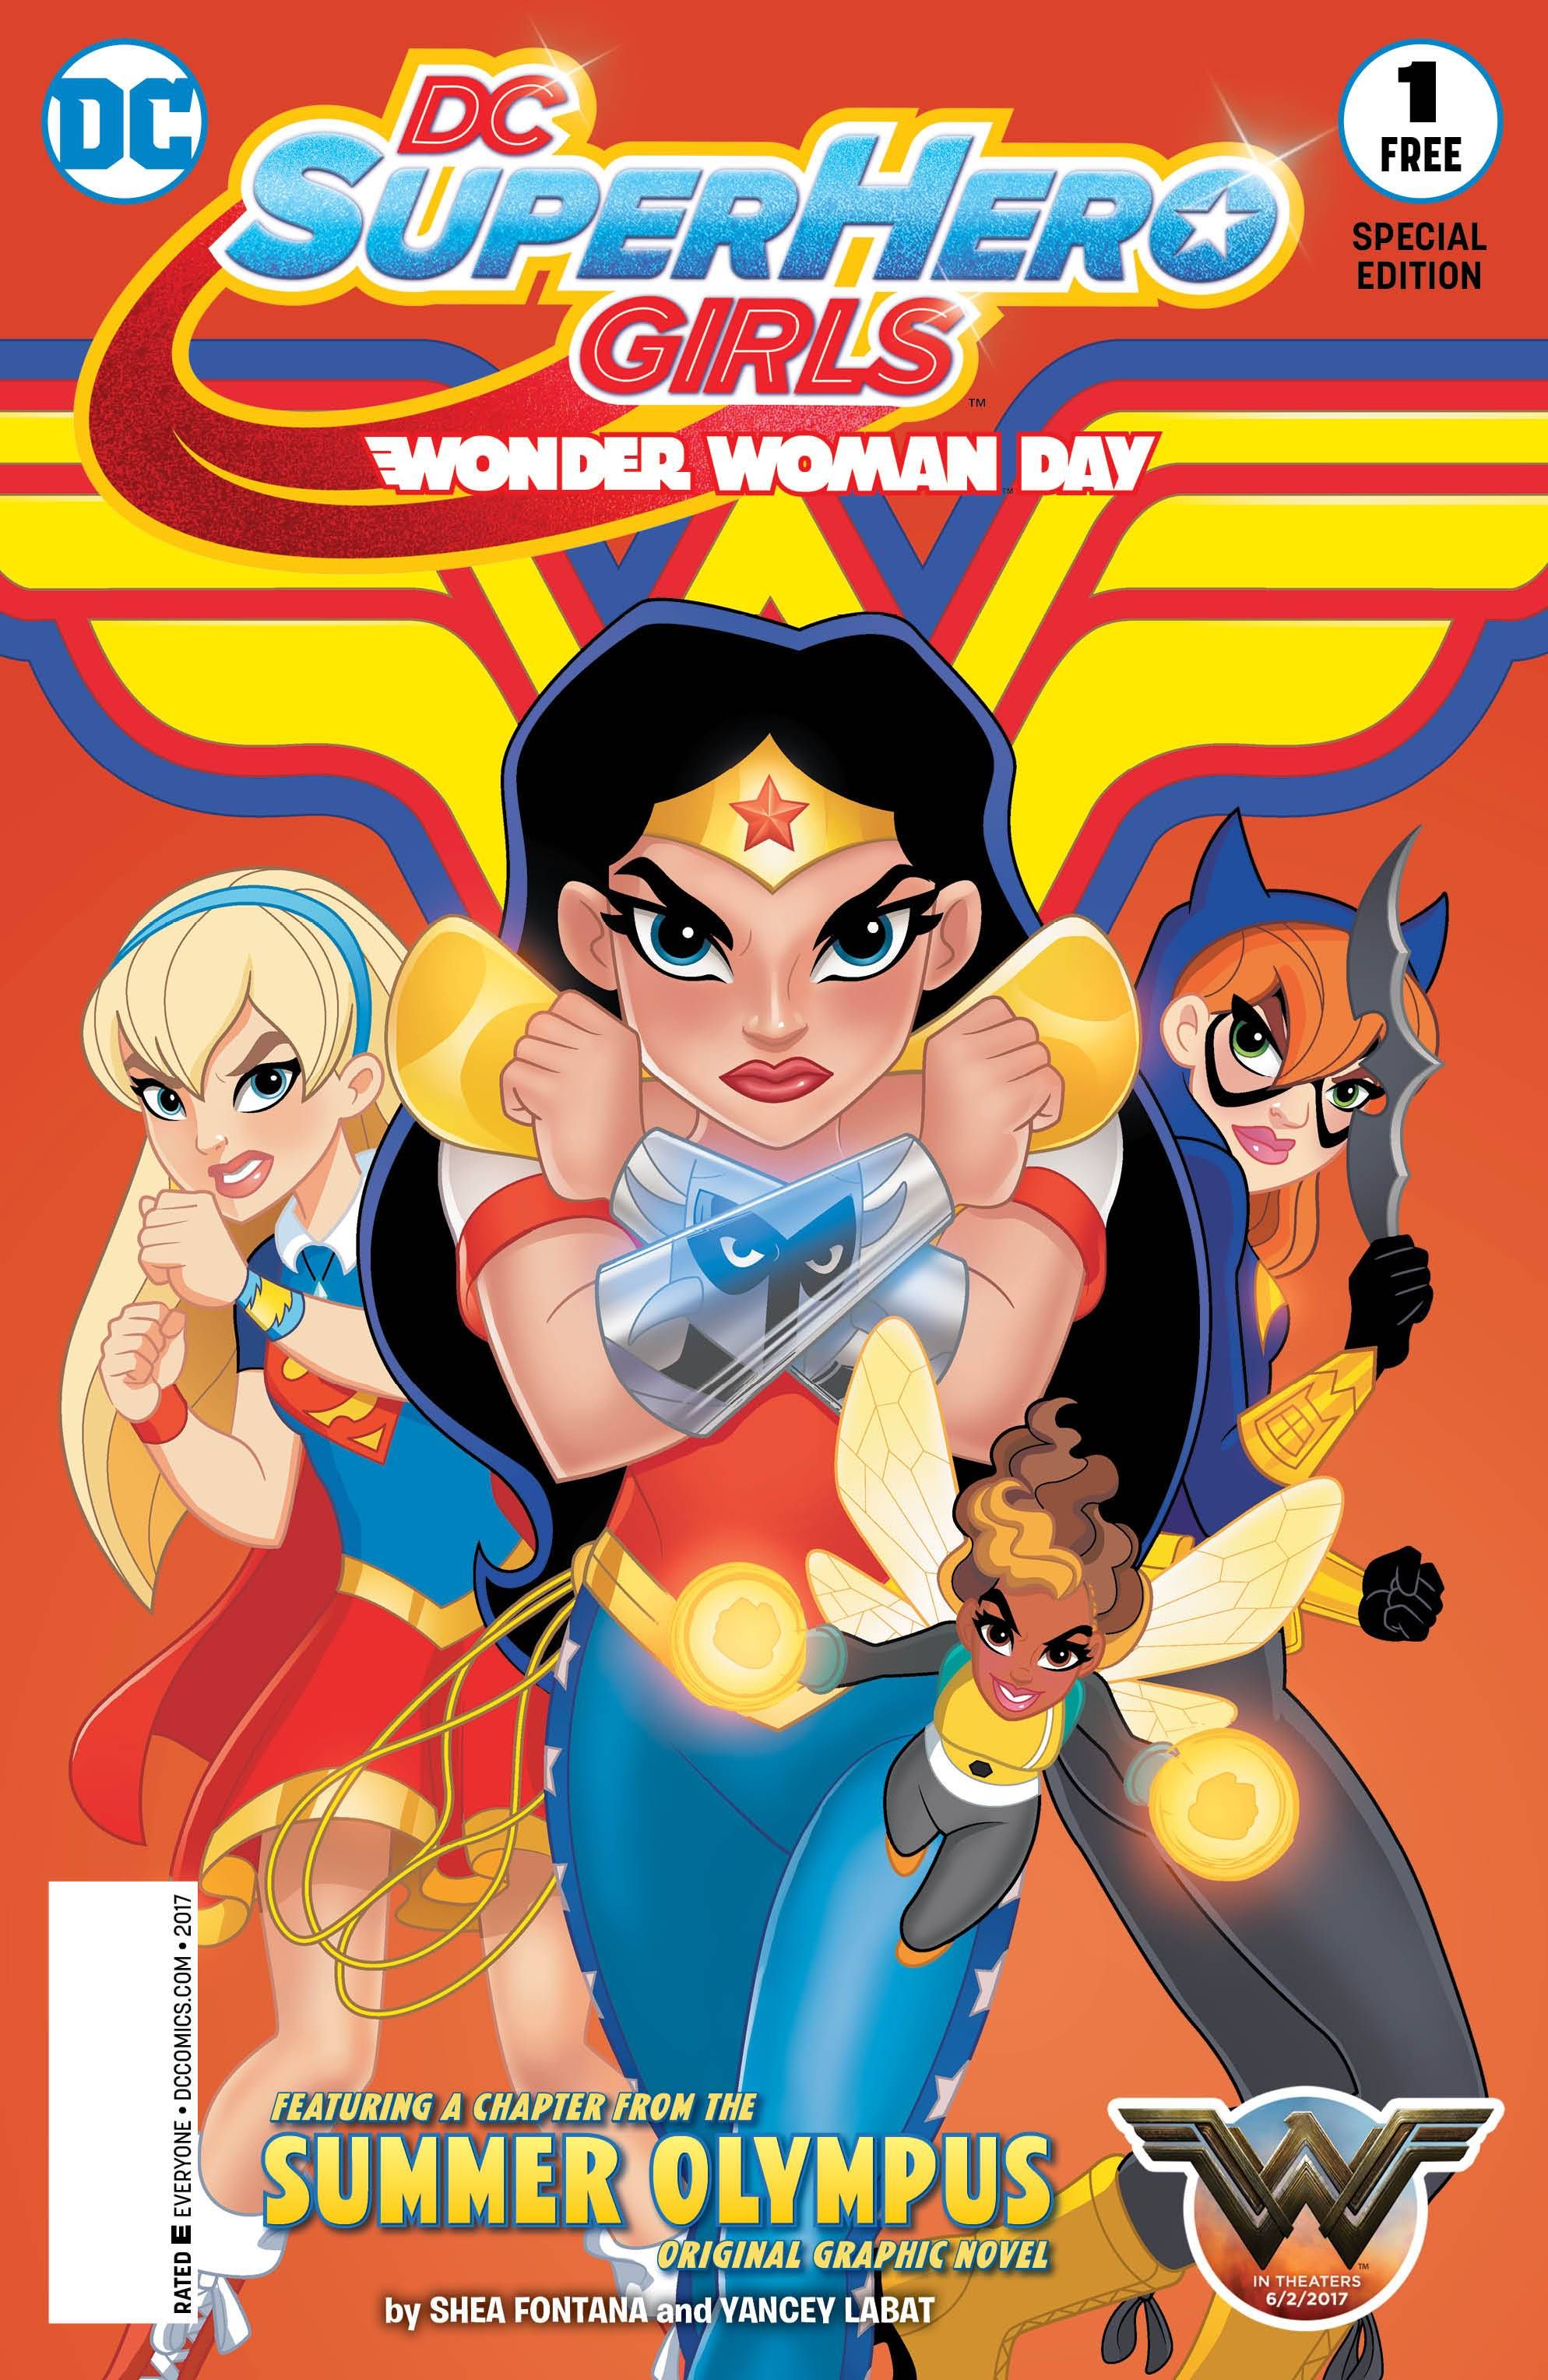 DC Super Hero Girls Wonder Woman Day Special #1 Comic